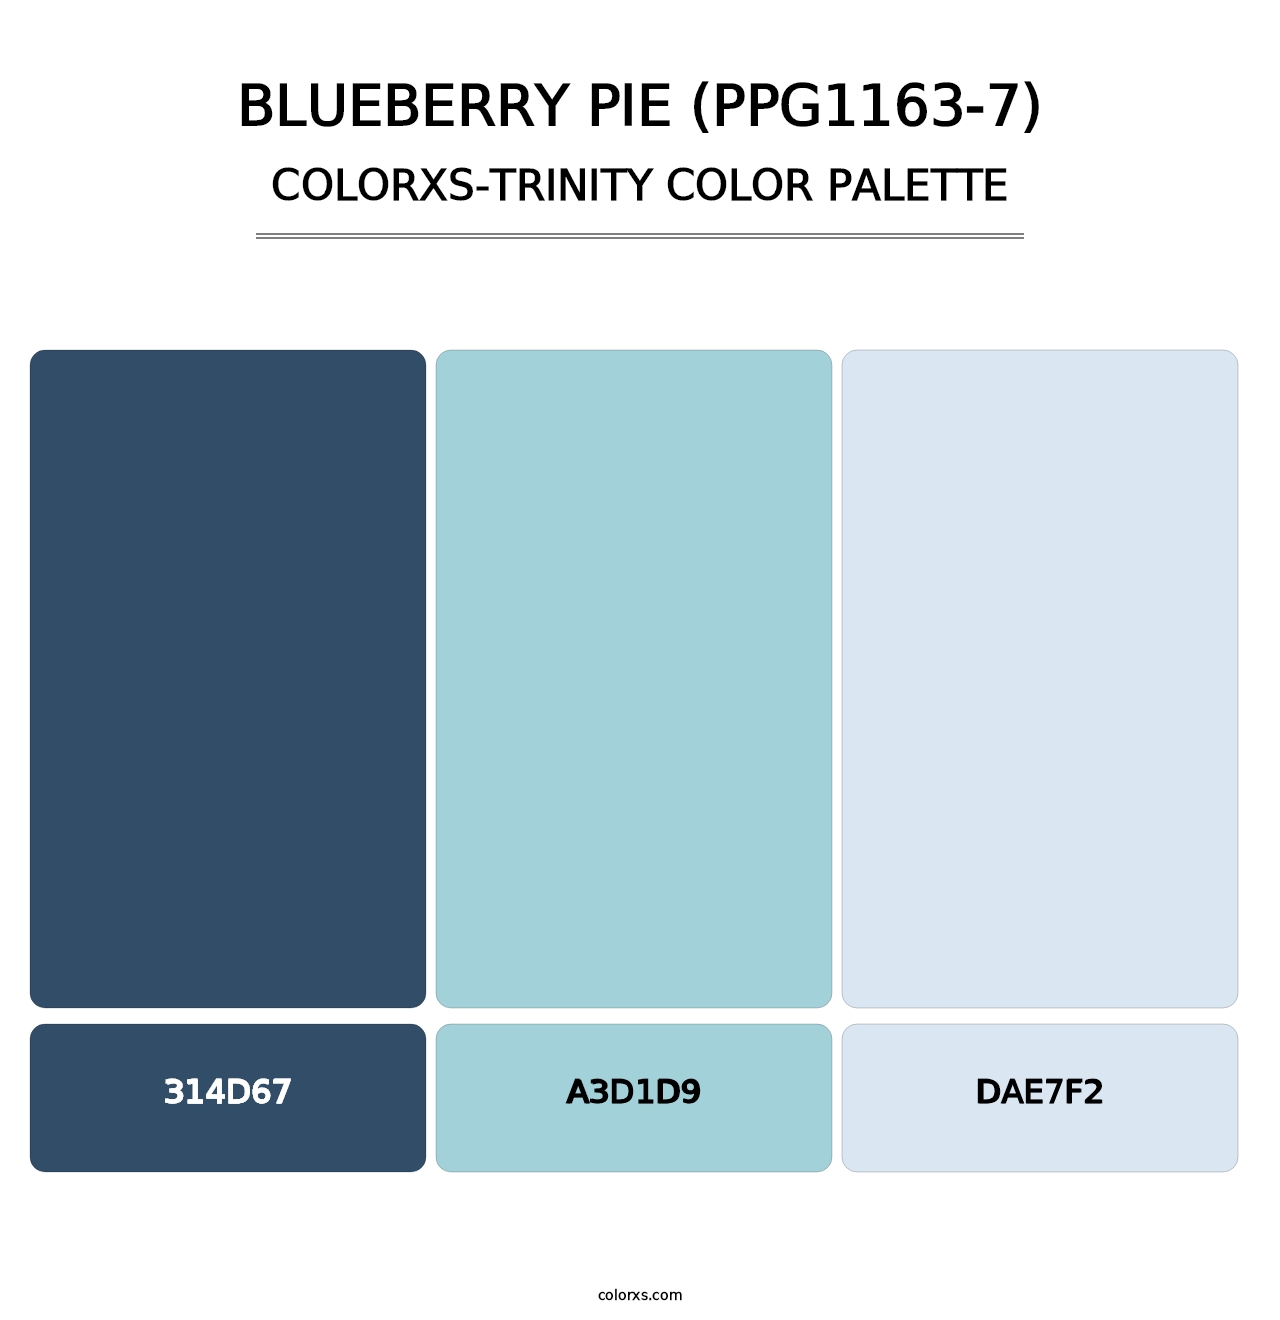 Blueberry Pie (PPG1163-7) - Colorxs Trinity Palette